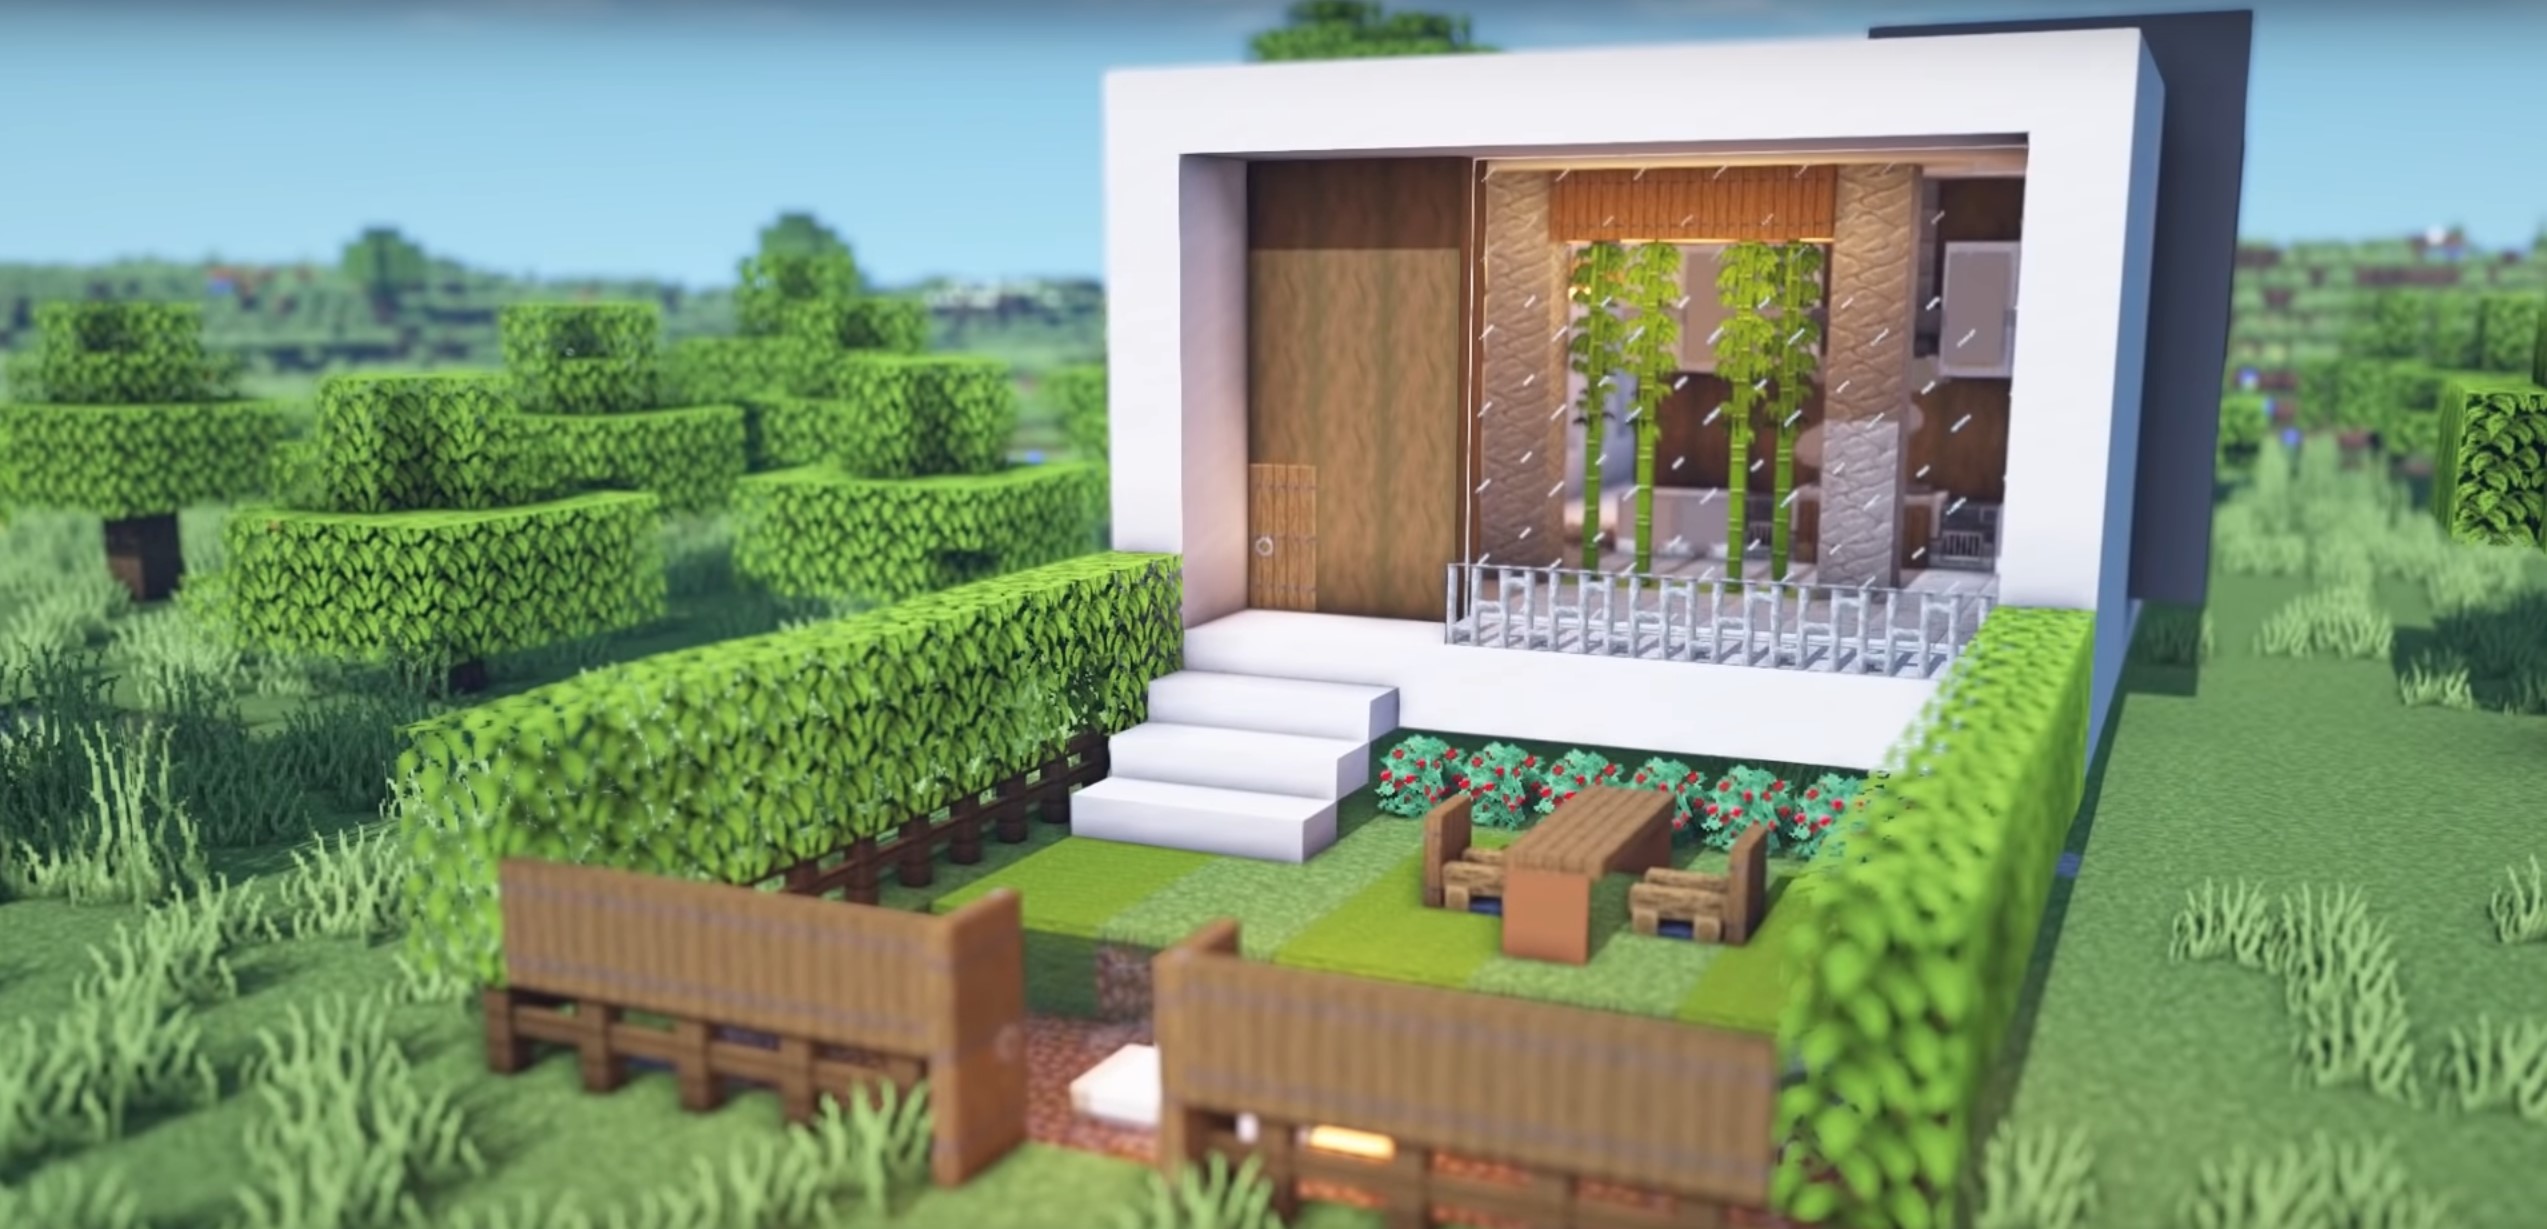 Minecraft Small but Cozy Modern House idea